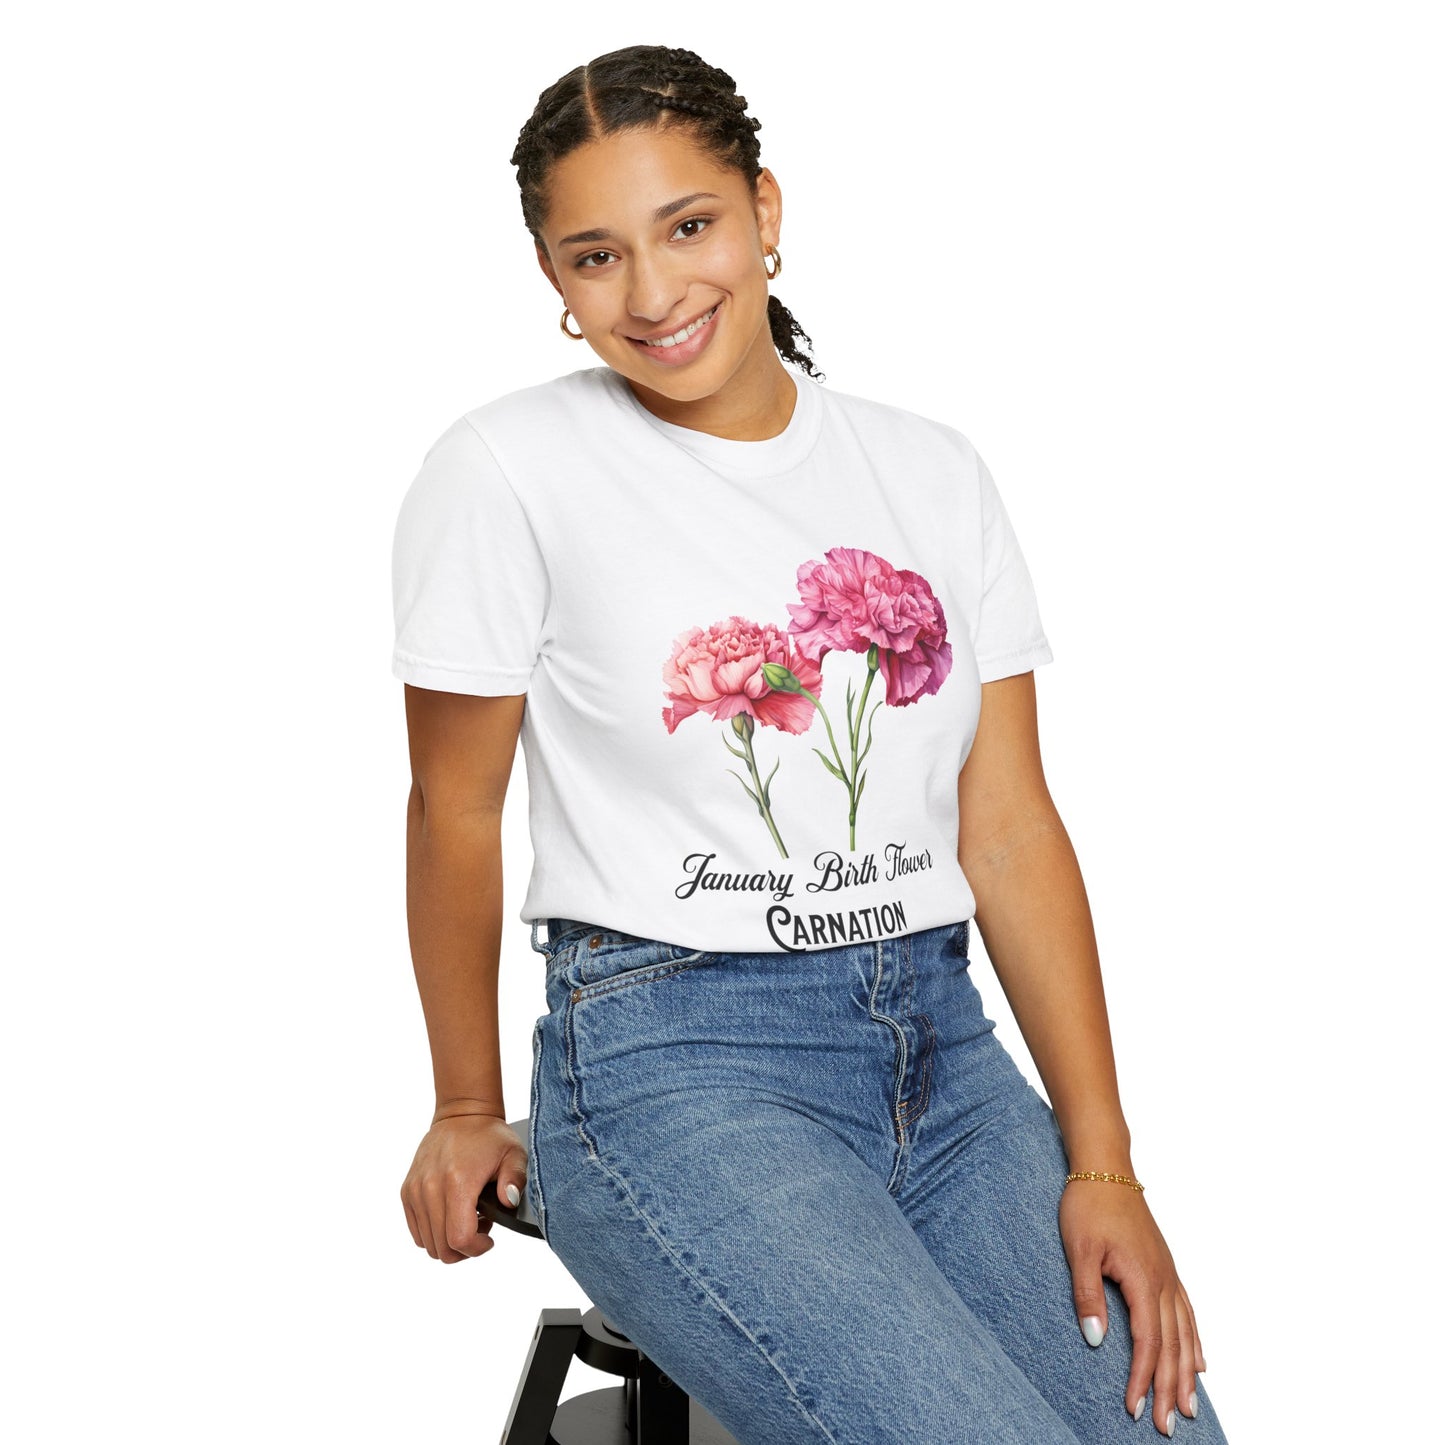 January Birth Flower "Carnation" - Unisex Garment-Dyed T-shirt